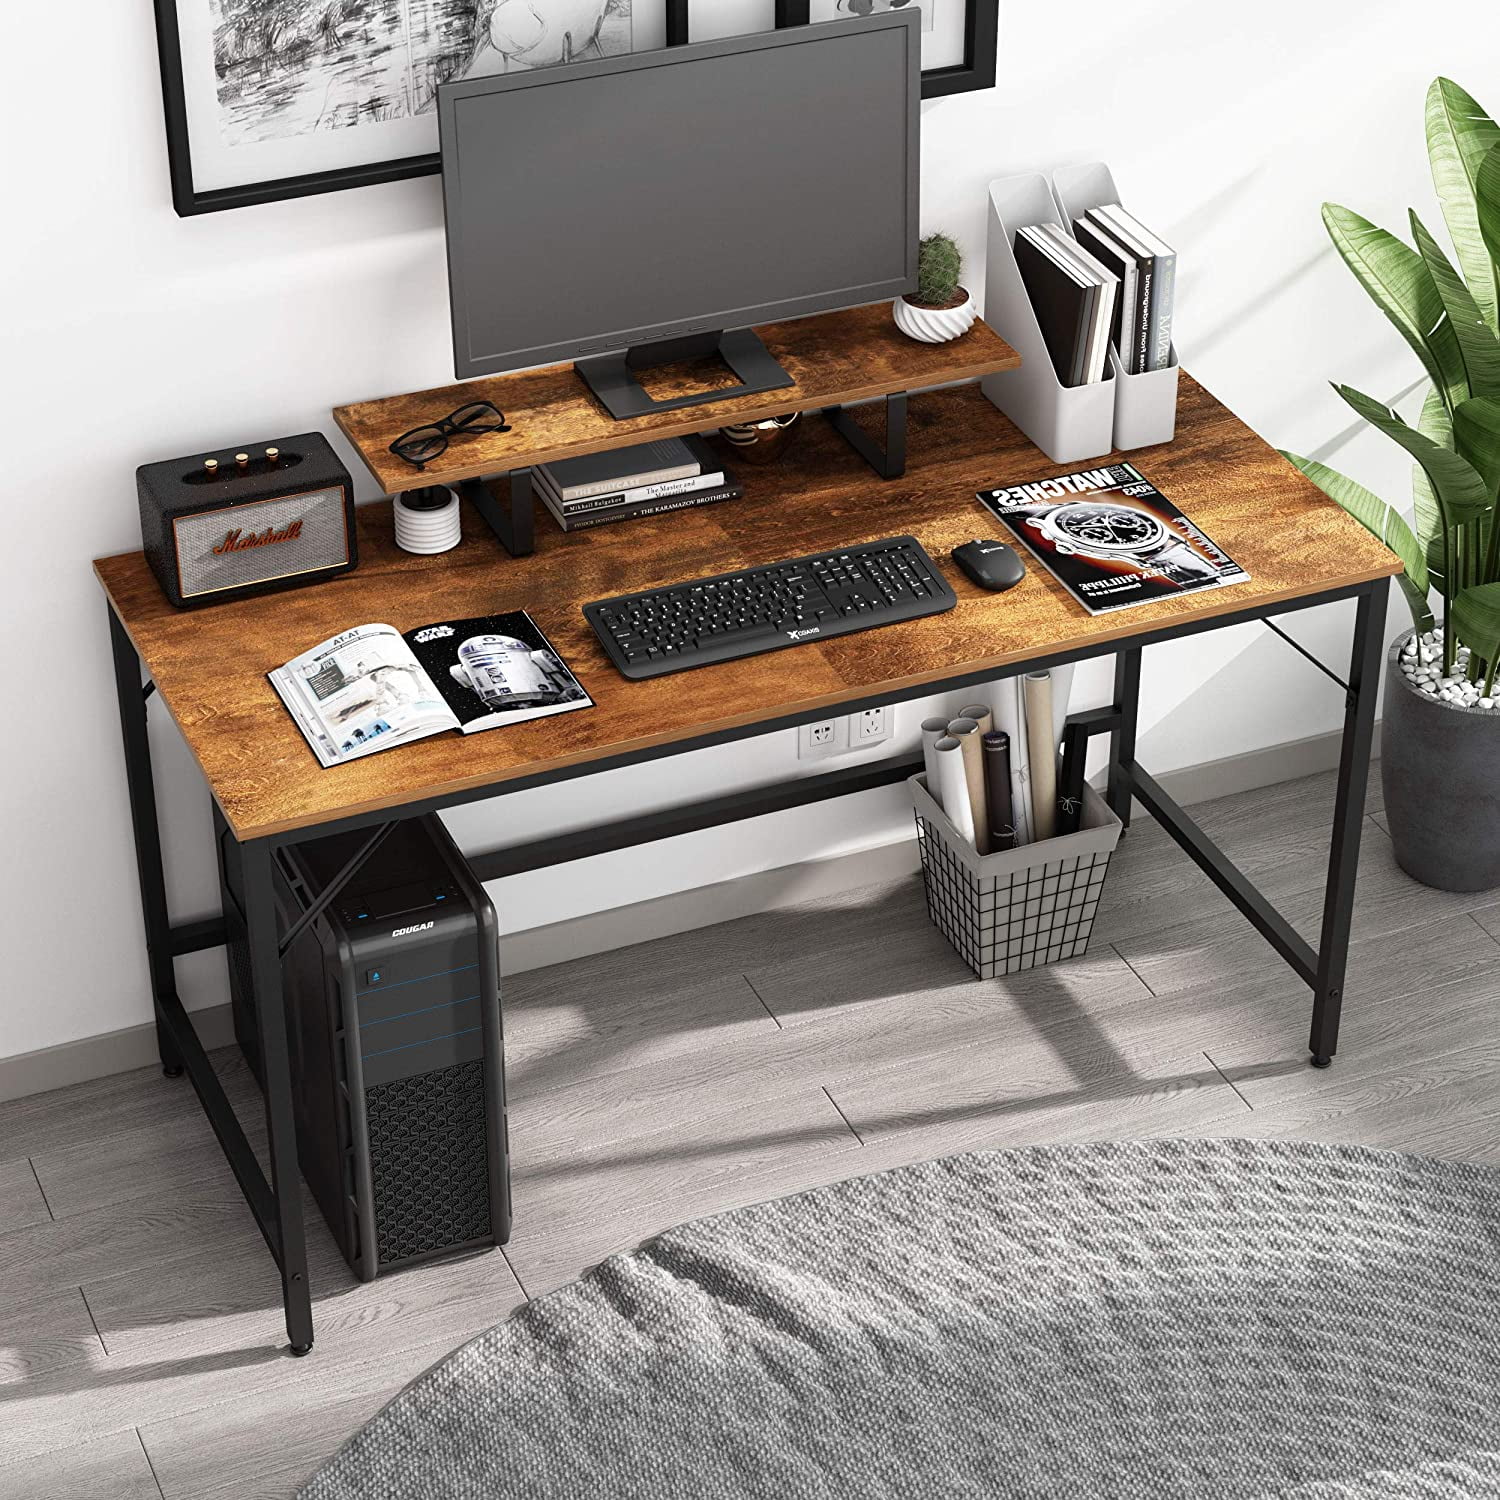 YAXIAO-Computer Desk Simple Desktop Computer Monitor Height Double Base Bracket Office Desk Keyboard Frame 52x23x17cm 